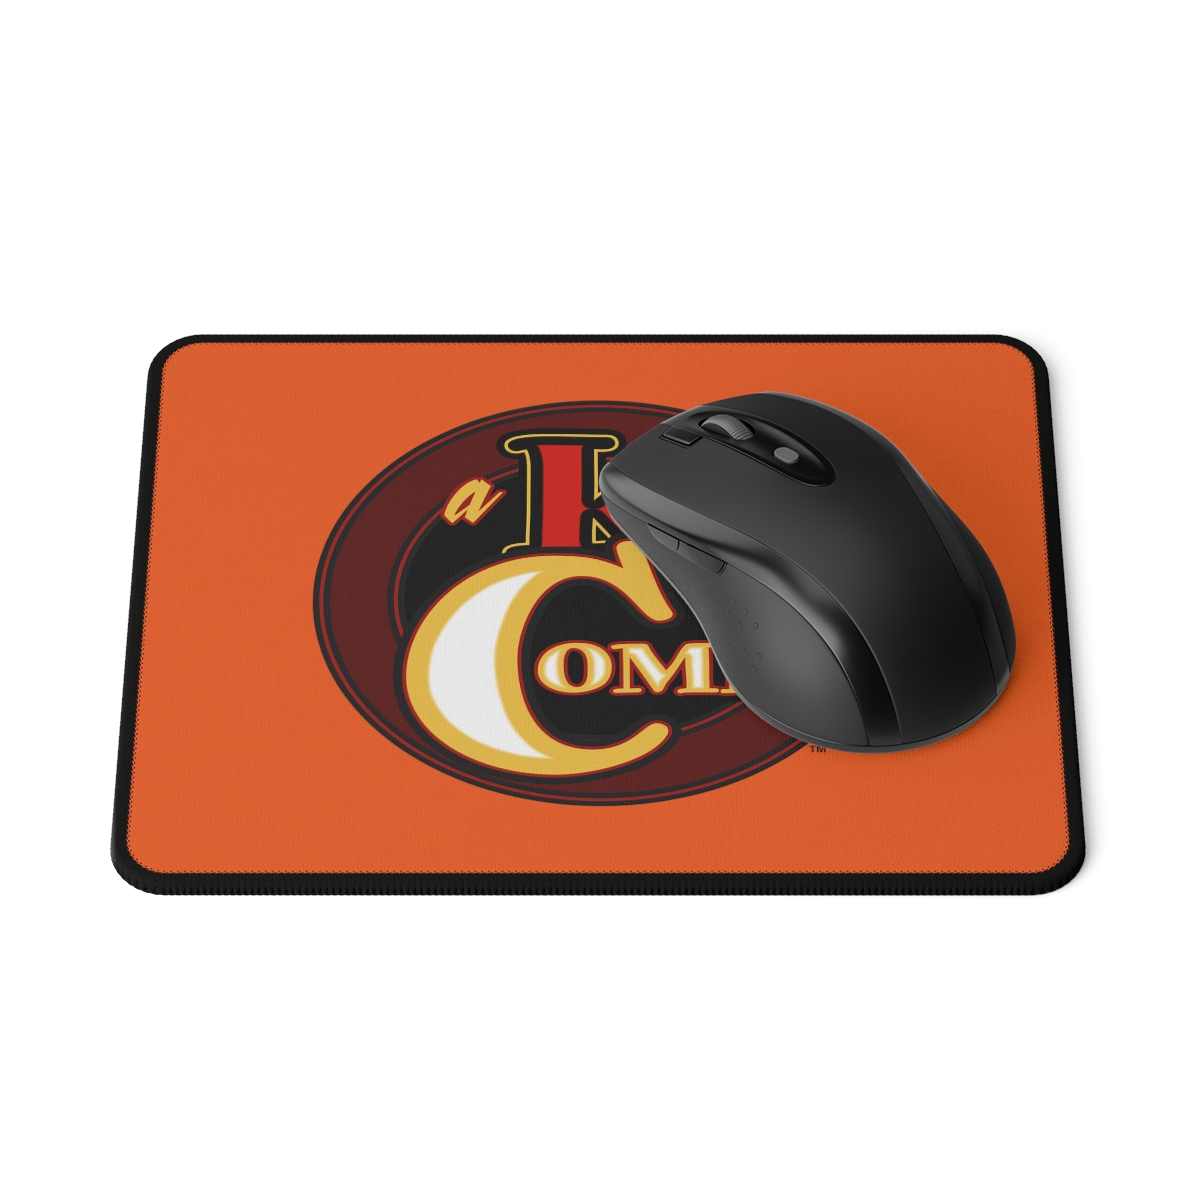 Non-Slip Mouse Pads product thumbnail image